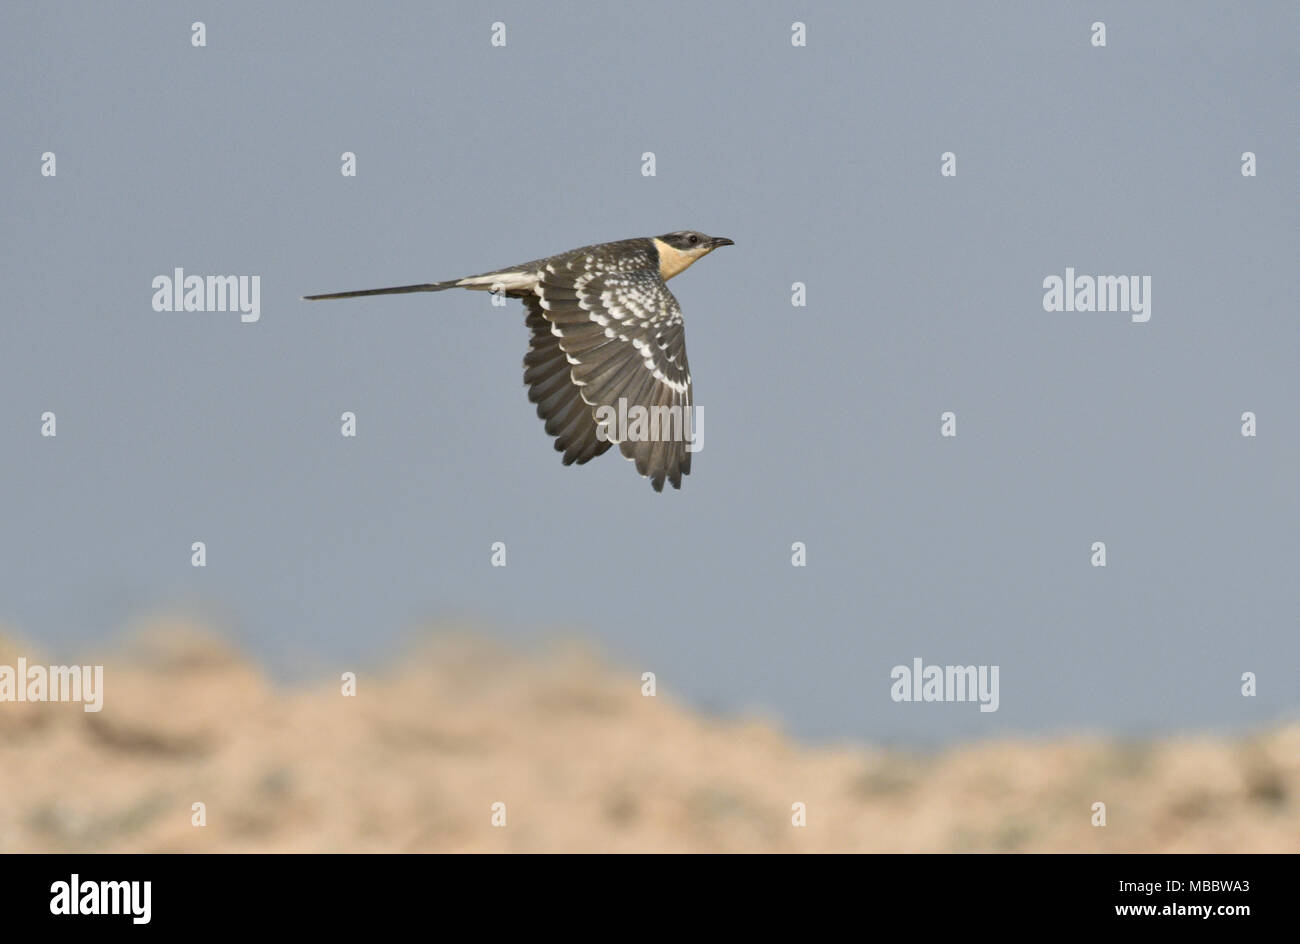 Great Spotted Cuckoo - Clamator glandarius Stock Photo